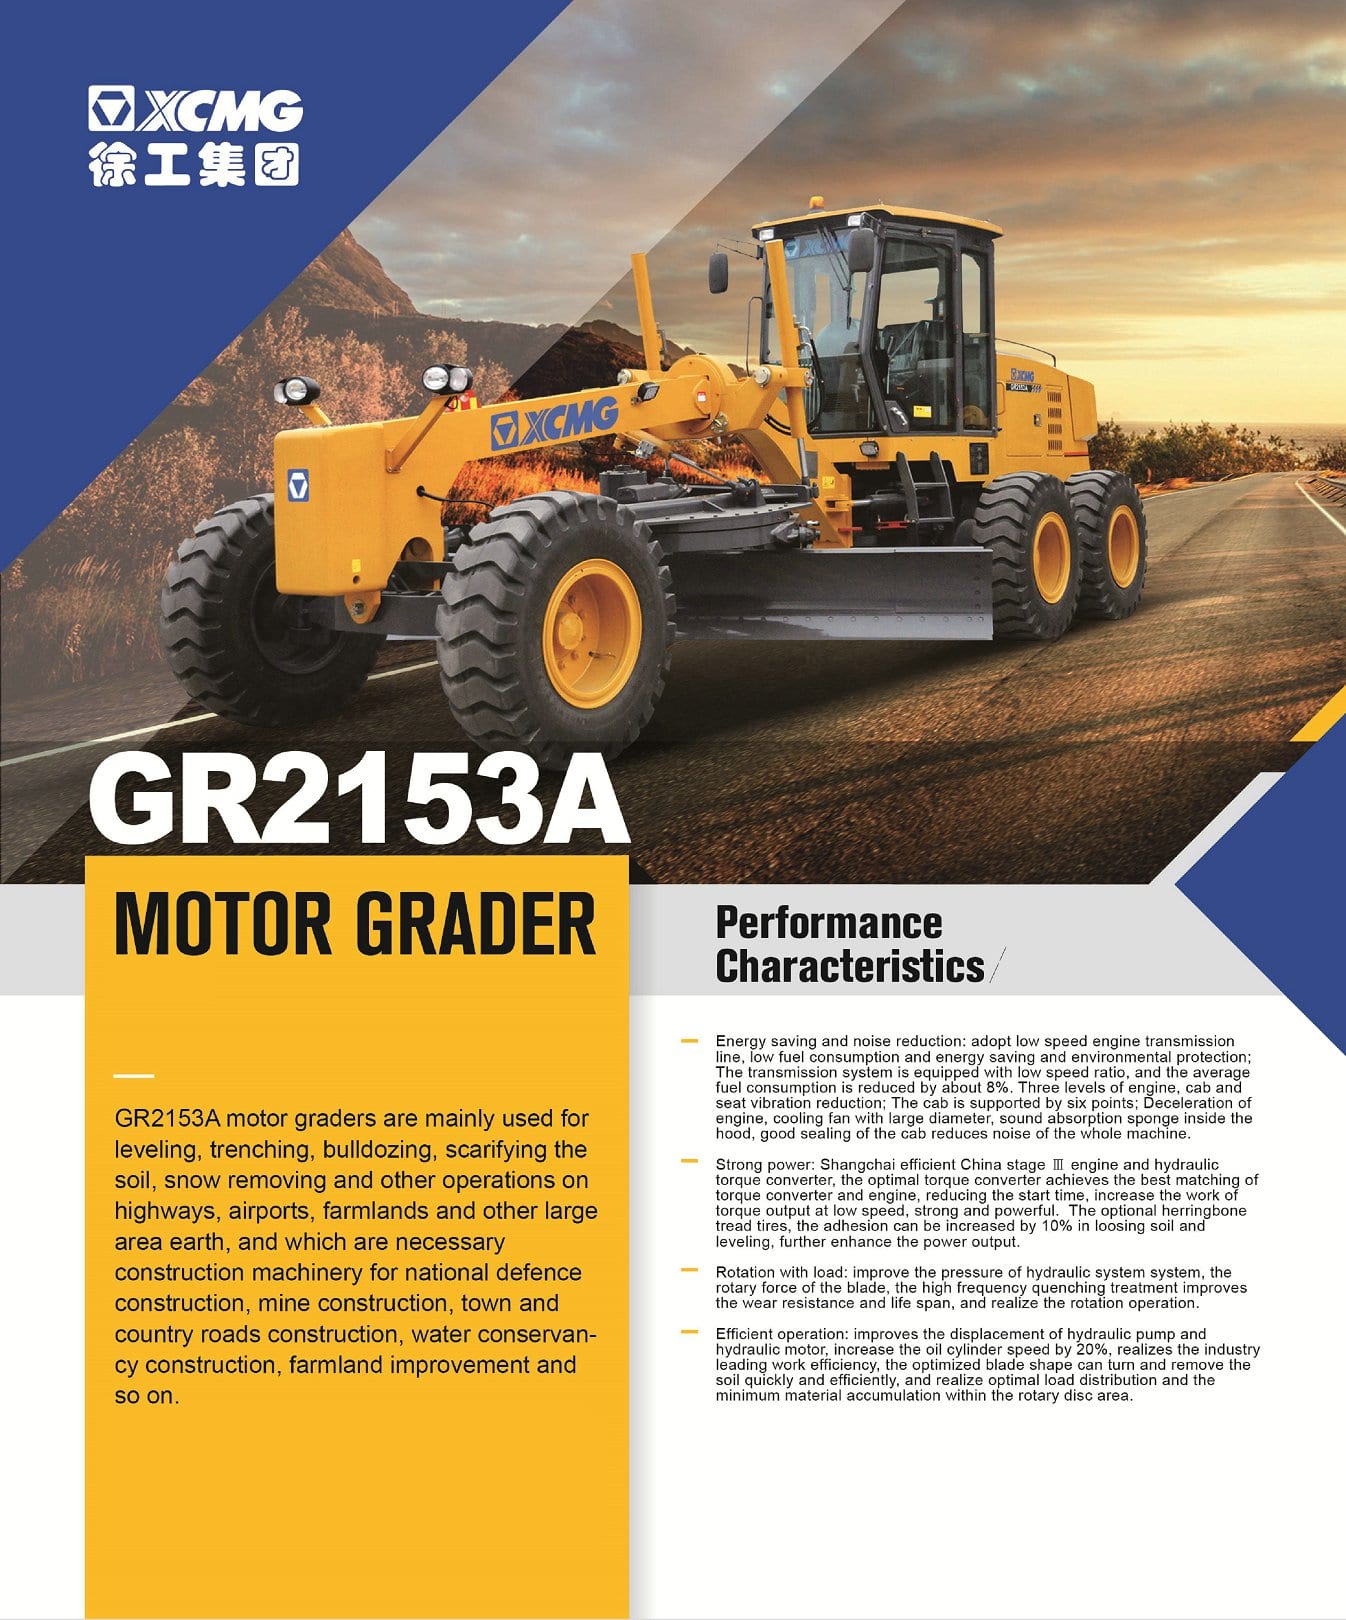 XCMG Official GR2153A Motor Grader for sale